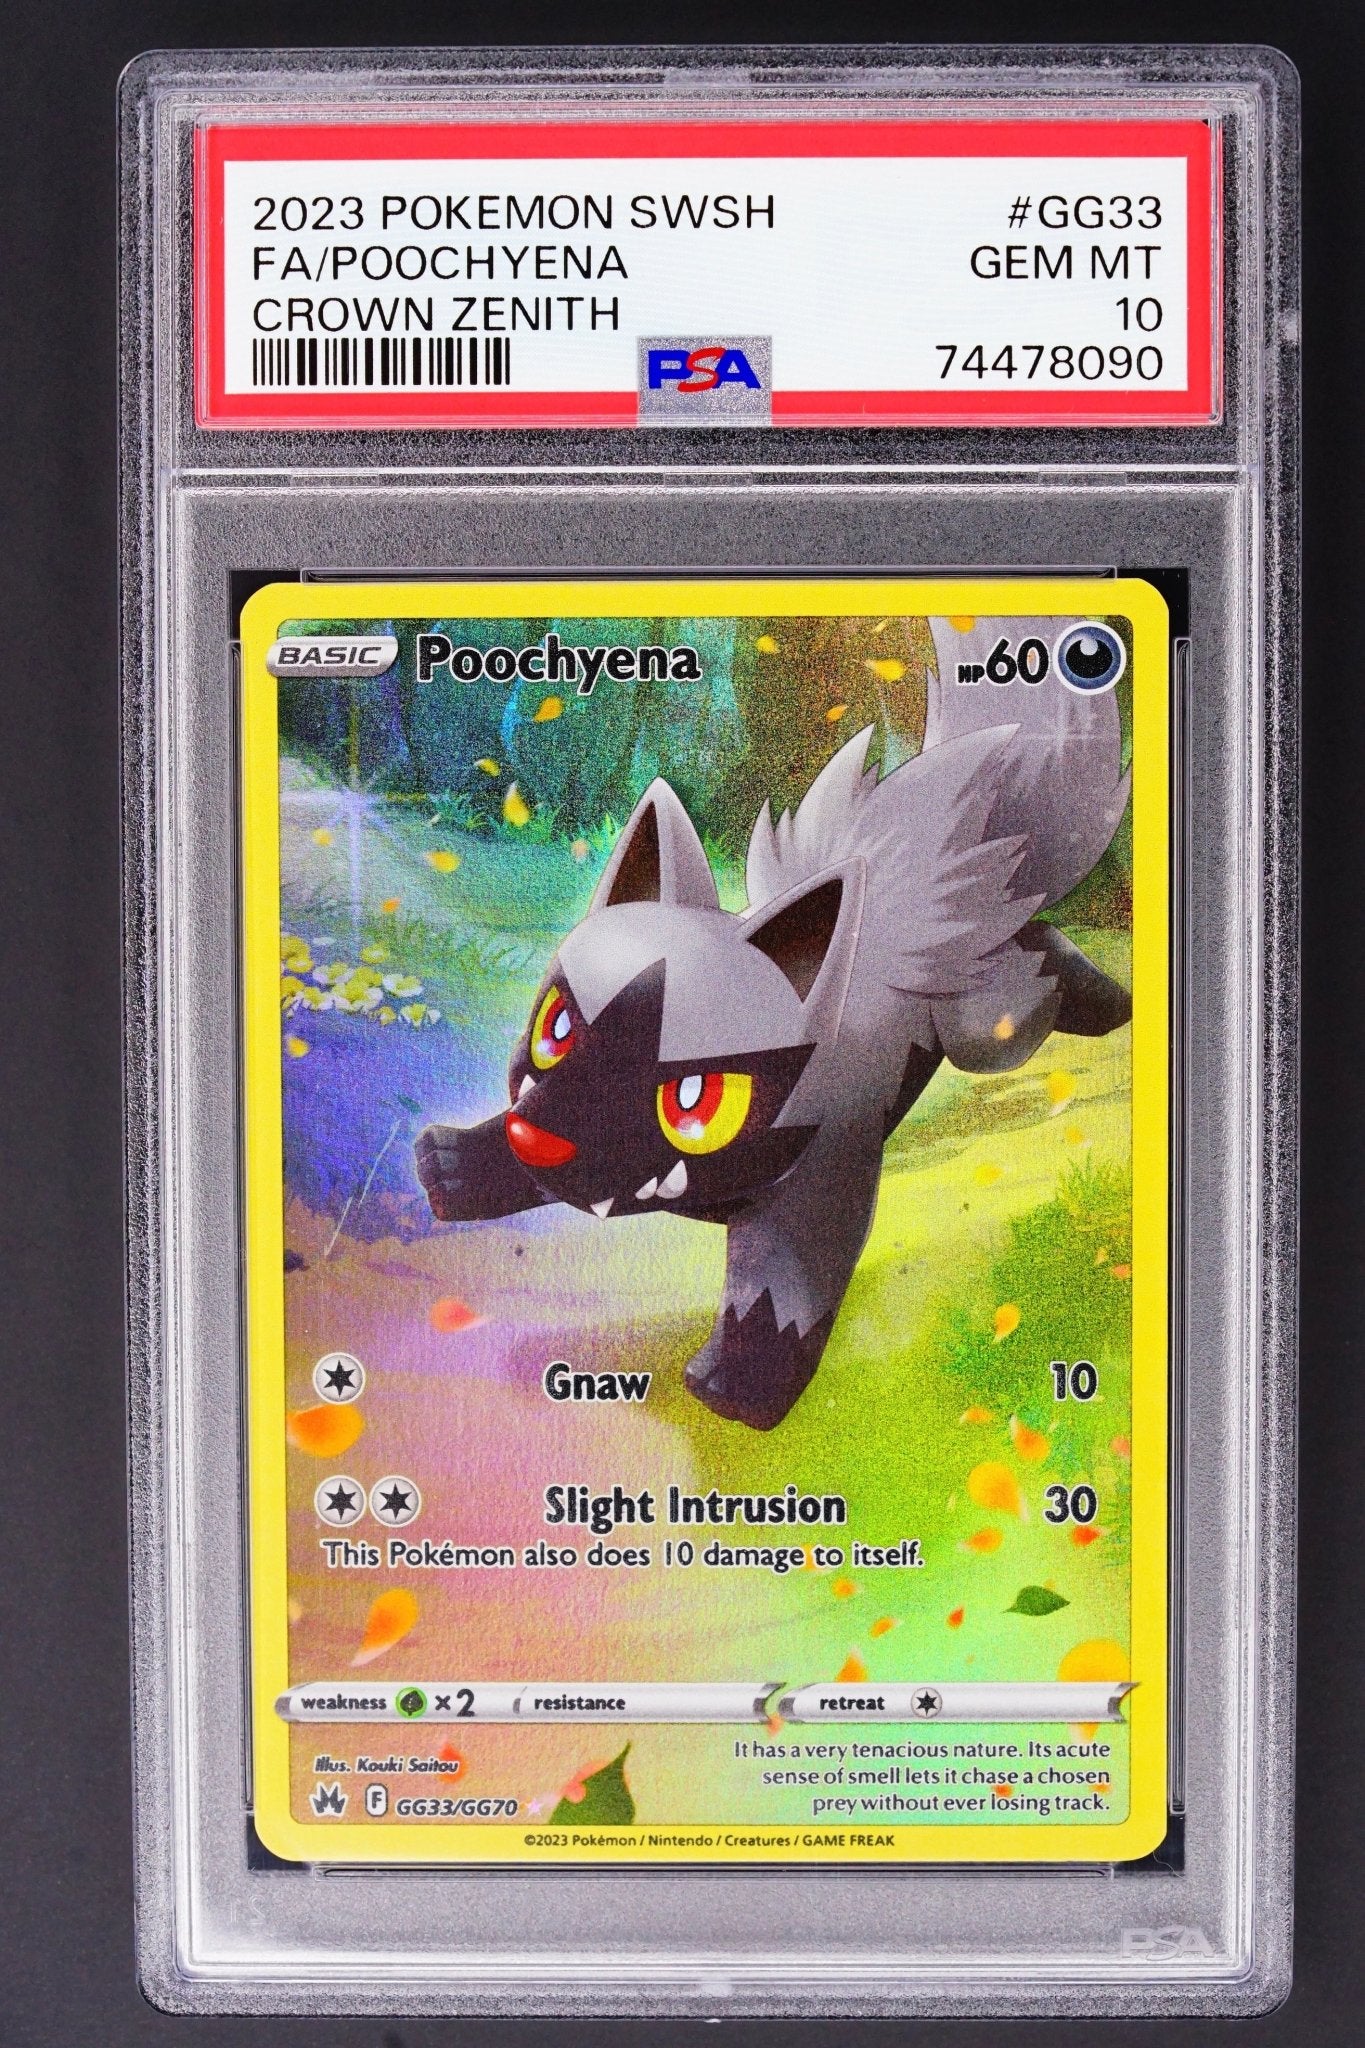 Poochyena Crown zenith PSA 10 - THE CARD SPOT PTY LTD.Pokemon GradedPokémon